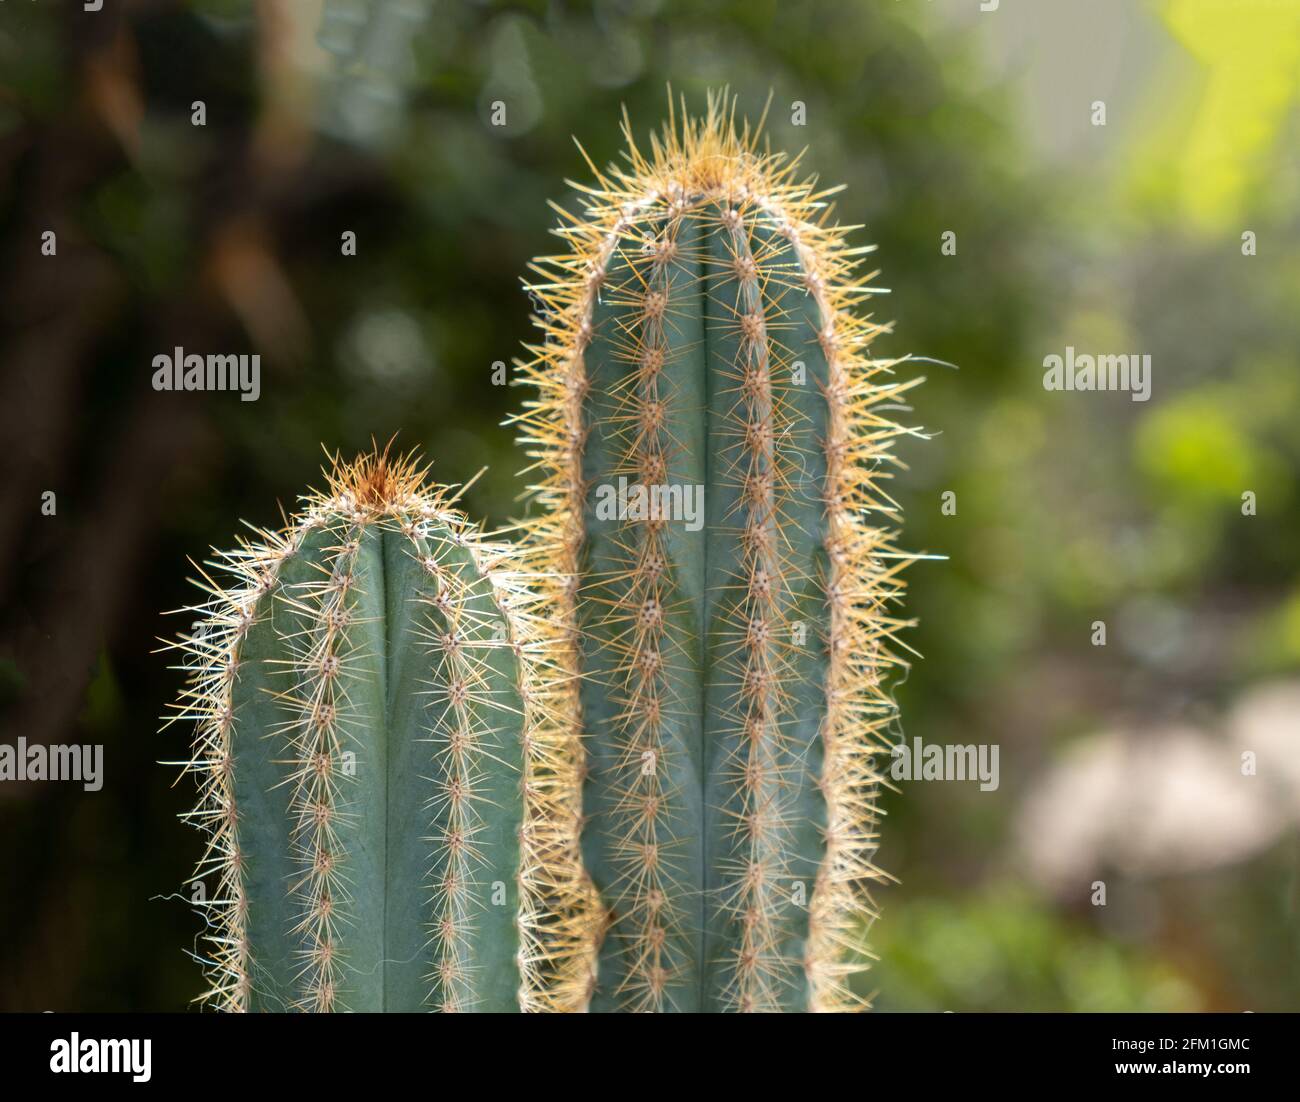 San Pedro cactus, trichocereus, echinopsis pachanoi with spines background. Tropical wild sharp thorns plants, cacti, contain mescaline, hallucinogeni Stock Photo